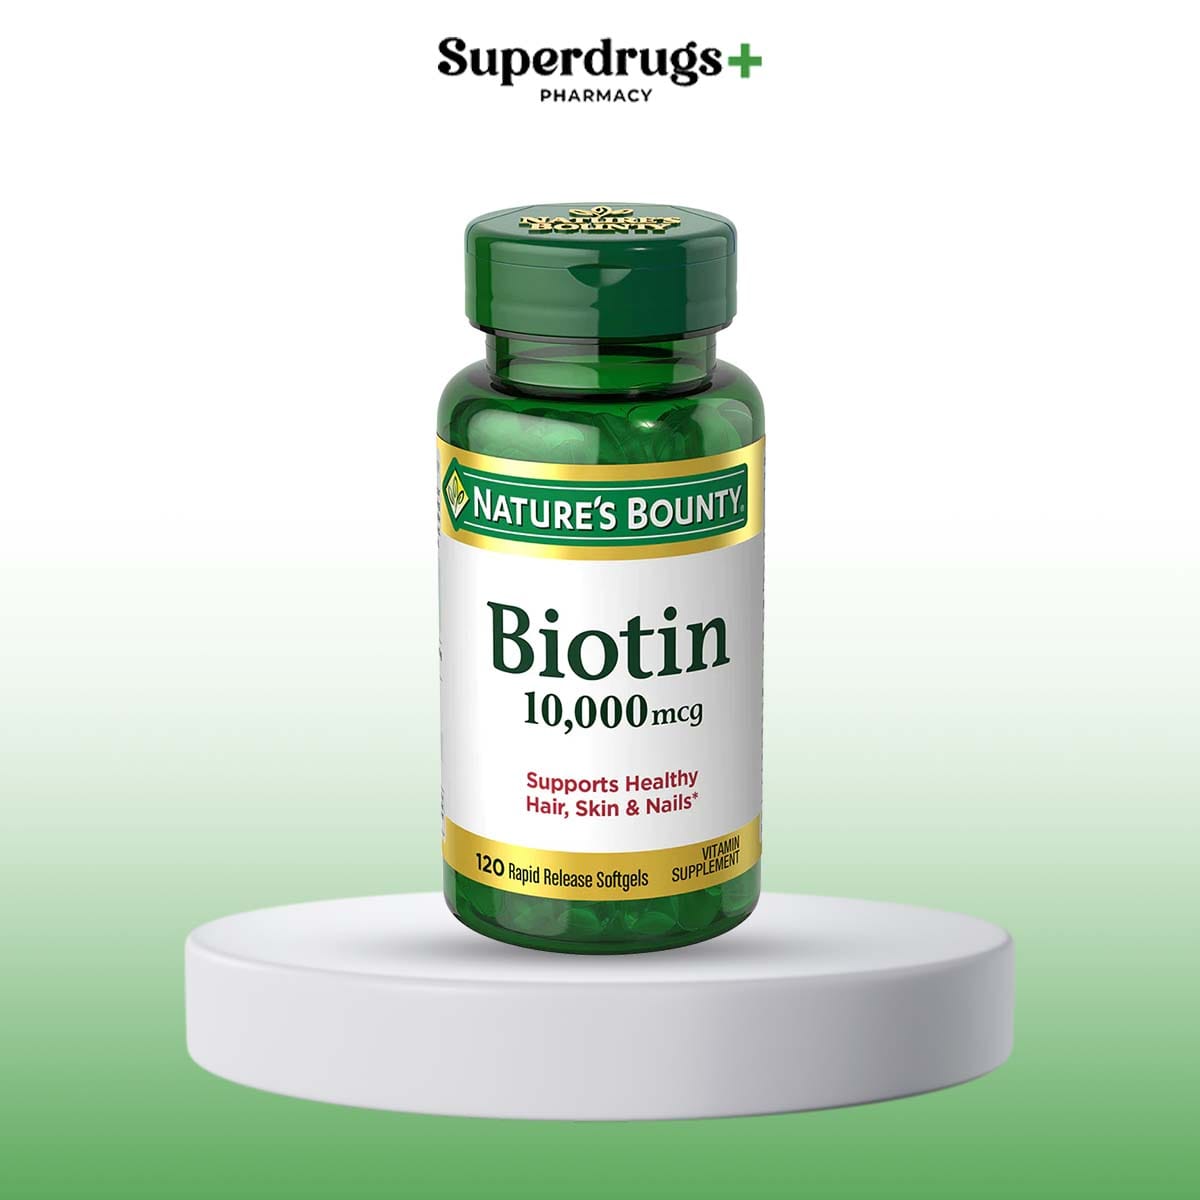 Nature's Bounty Biotin 10,000mcg Softgels 120s